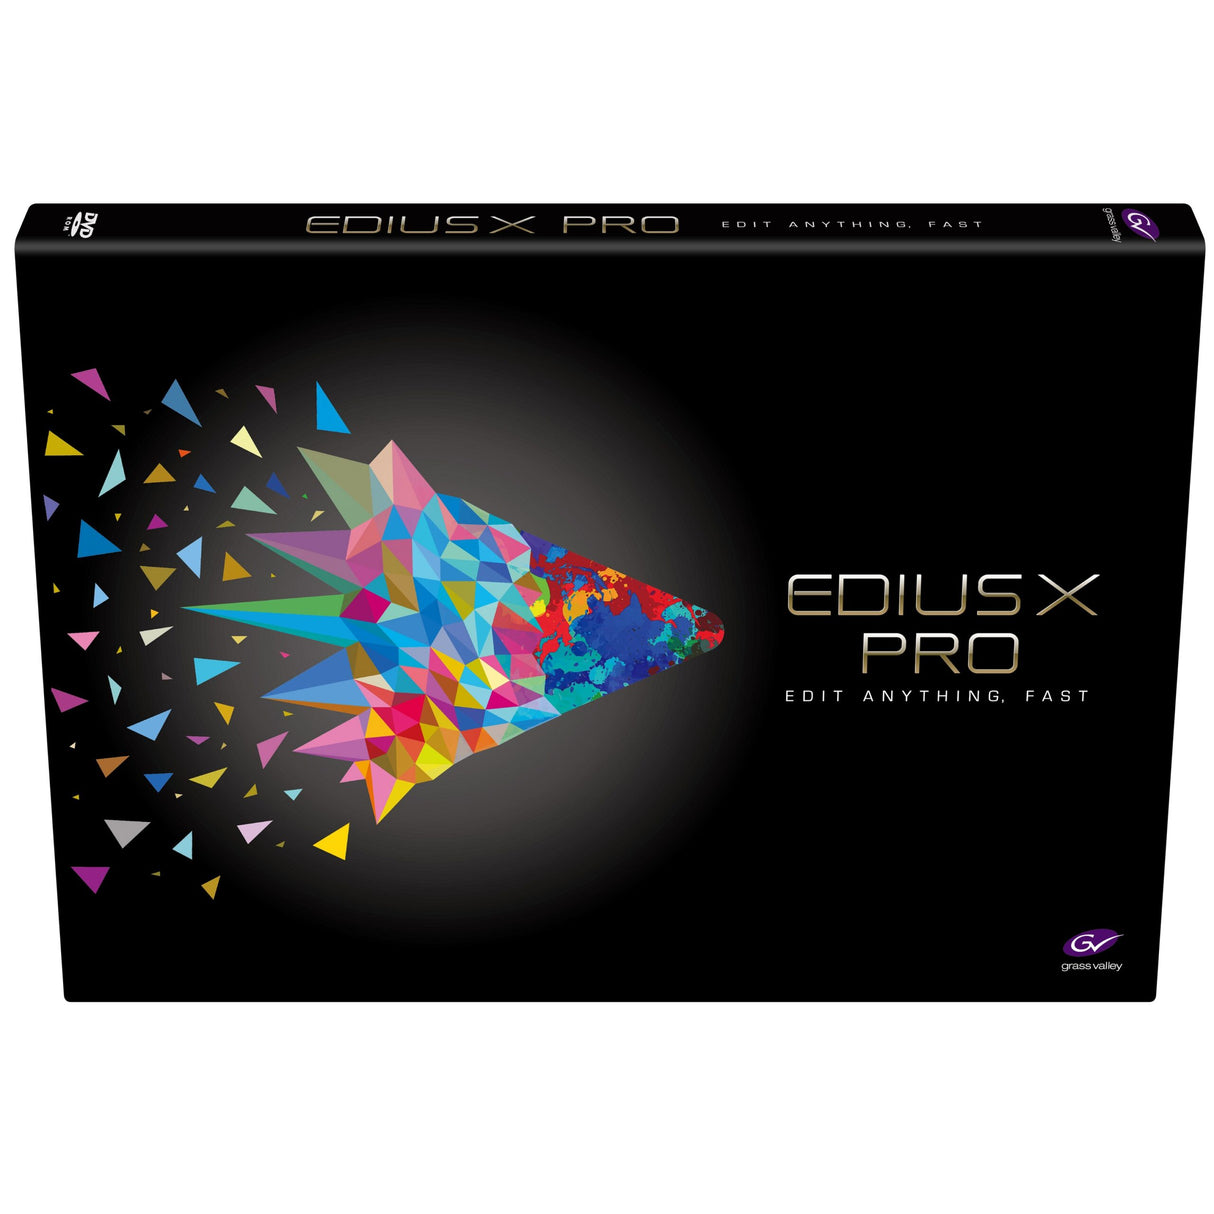 EDIUS X Pro Video Editing Software Jump Upgrade from EDIUS 2-8, EDIUS EDU, Home Edition and EDIUS Neo, Download Only